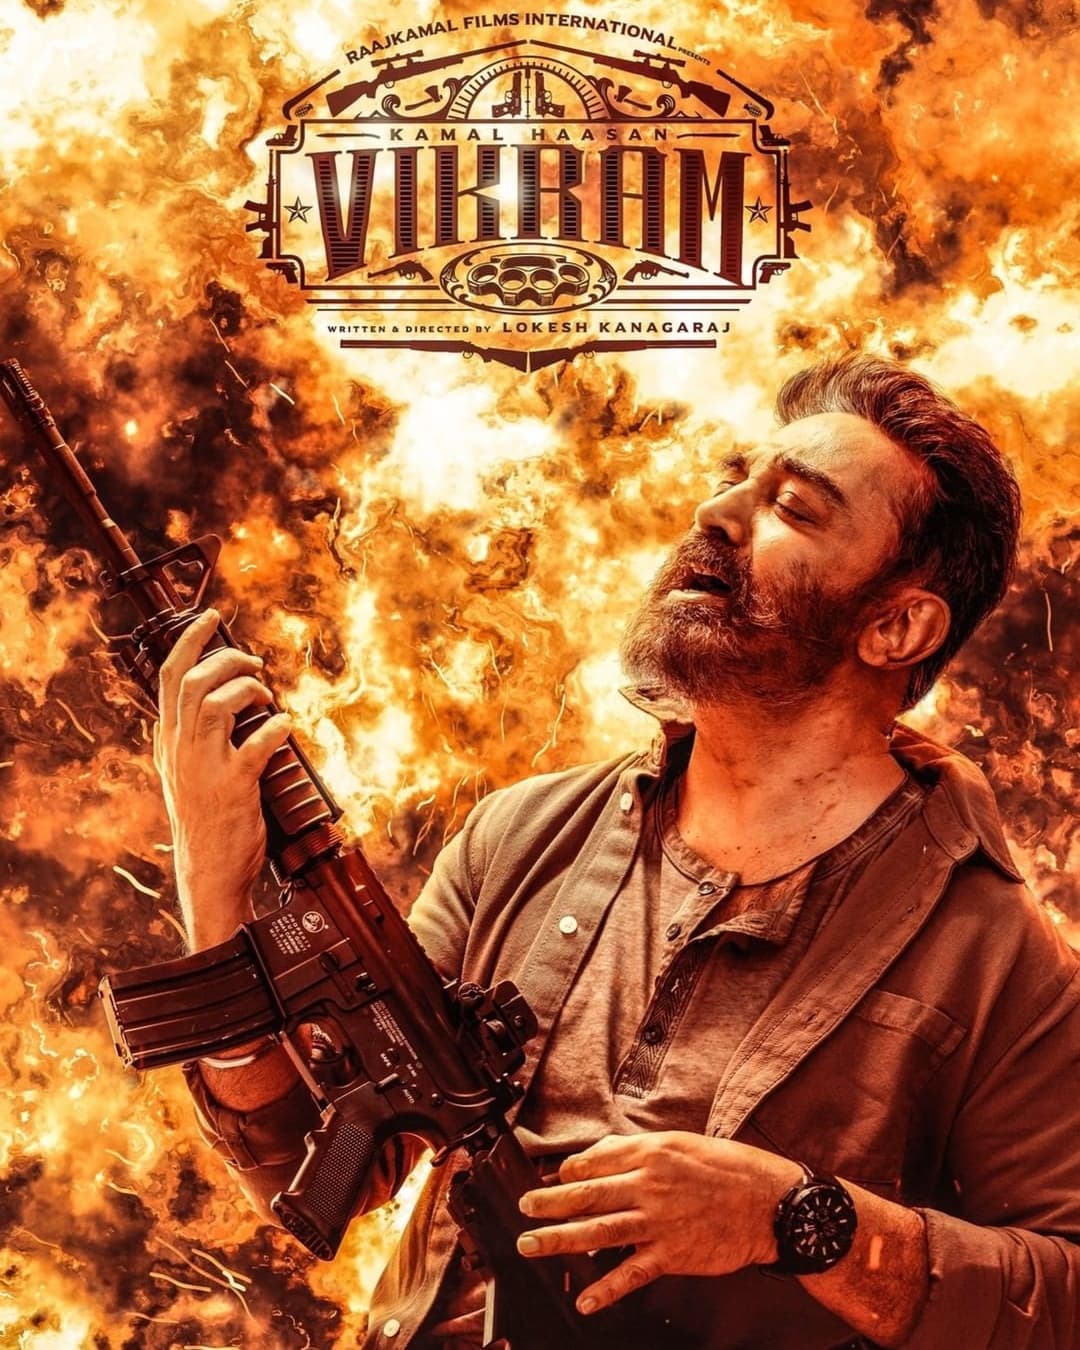 Kamal Haasan Vikram movie first glance HD wallpaper download